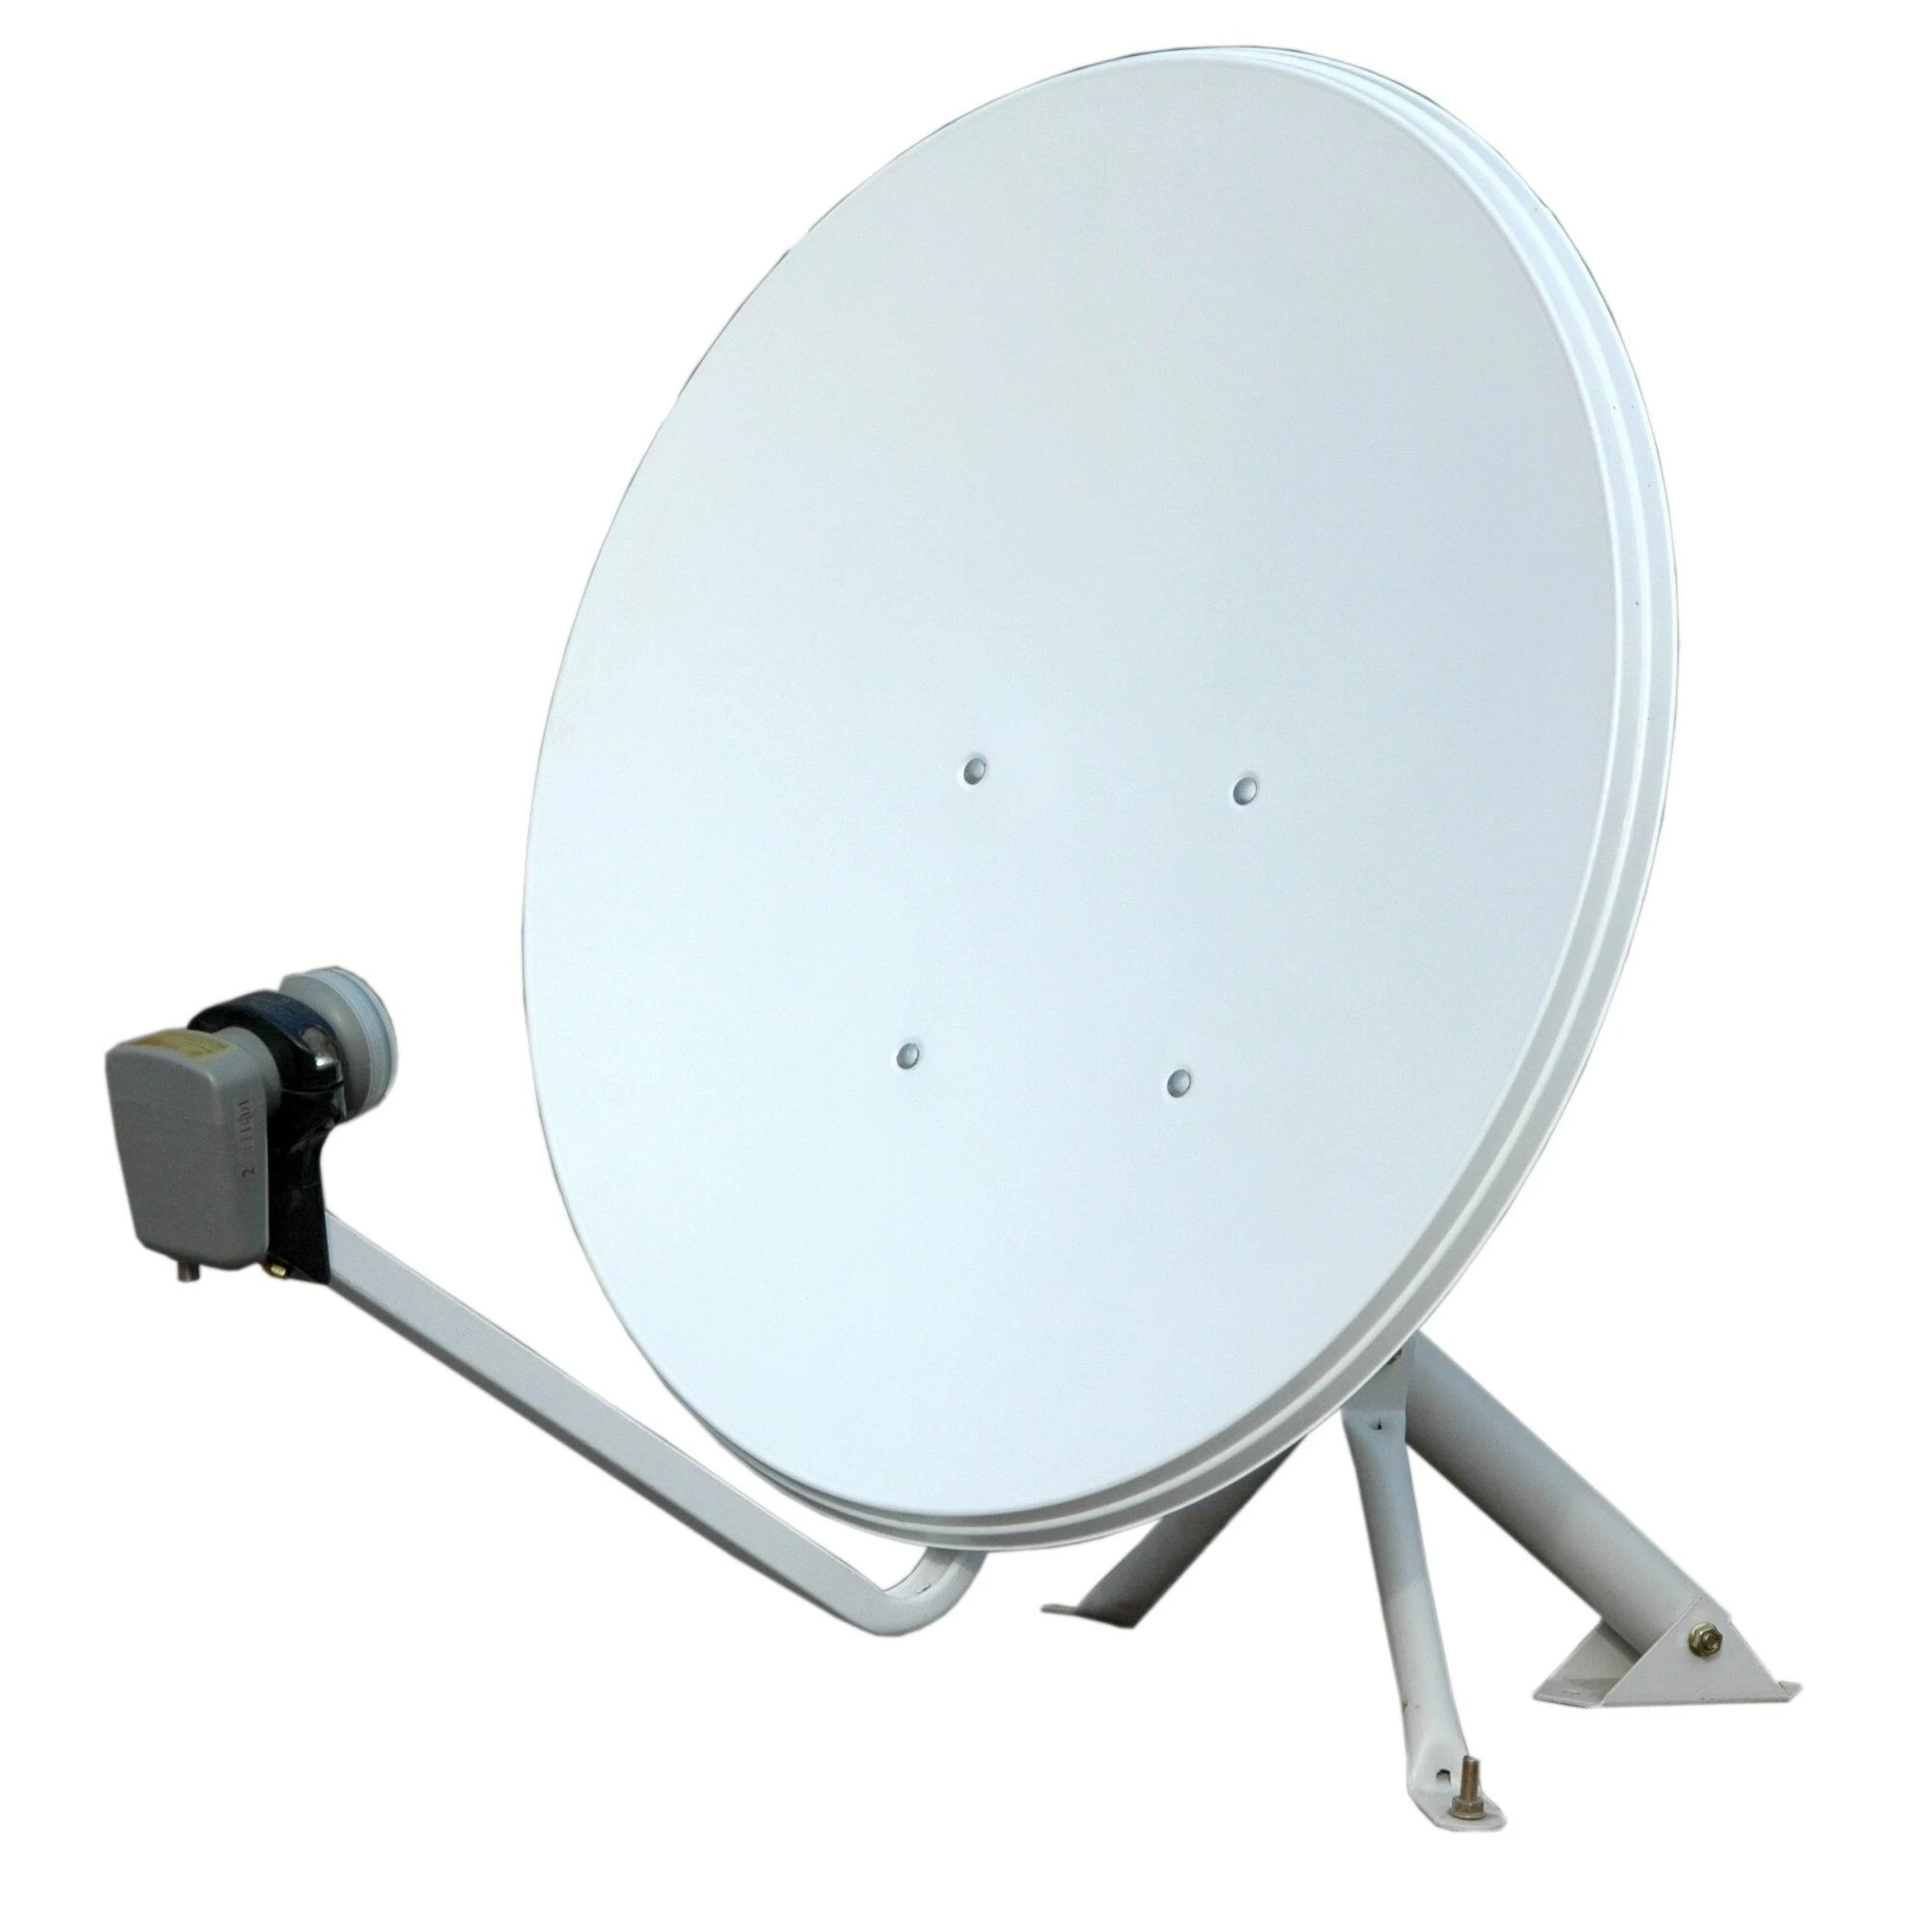 Satellite dish. Антенна спутниковая 120 см Supral. LNB 18 спутниковая антенна. Прямофокусная спутниковая антенна SVEC. Антенна 433mhz (с кронштейном).